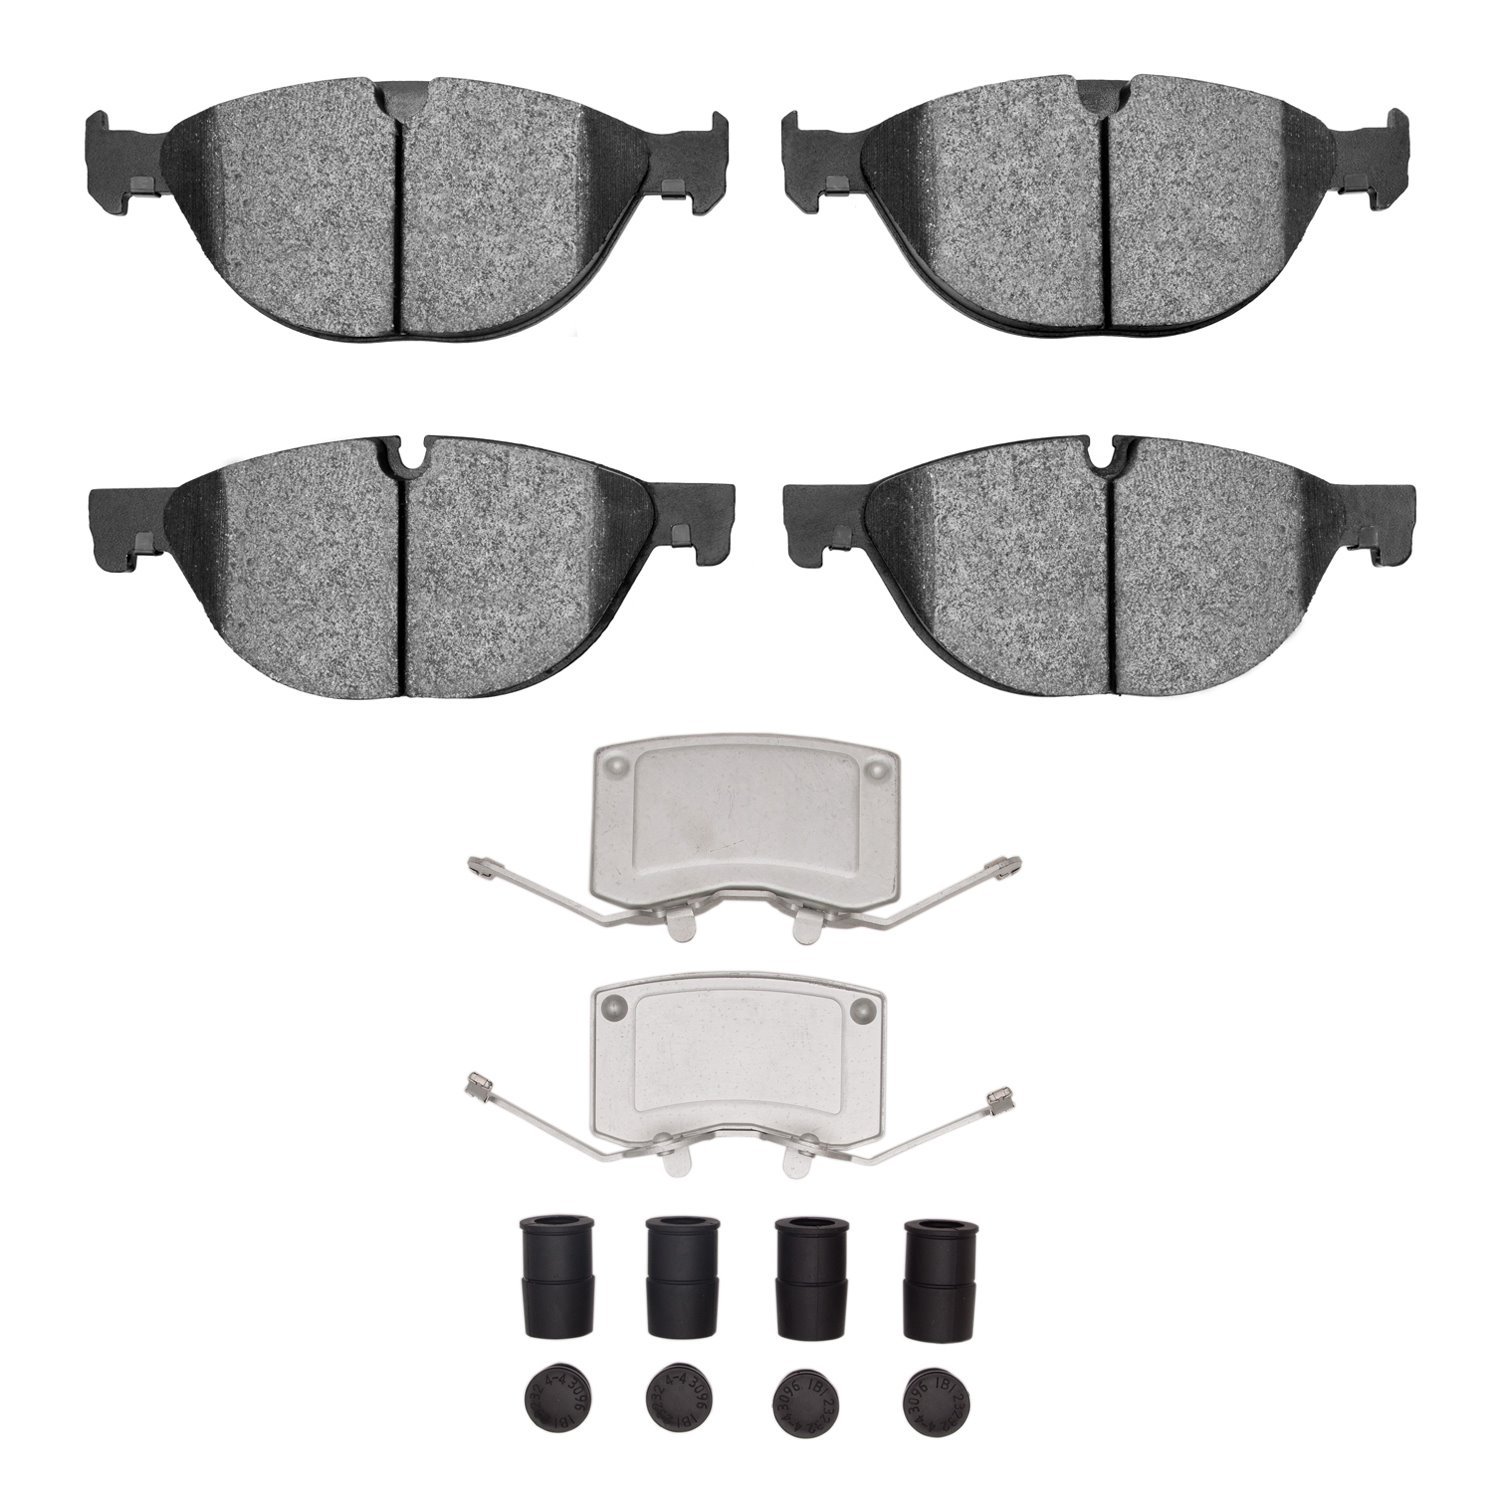 1551-1448-01 5000 Advanced Low-Metallic Brake Pads & Hardware Kit, Fits Select Jaguar, Position: Front